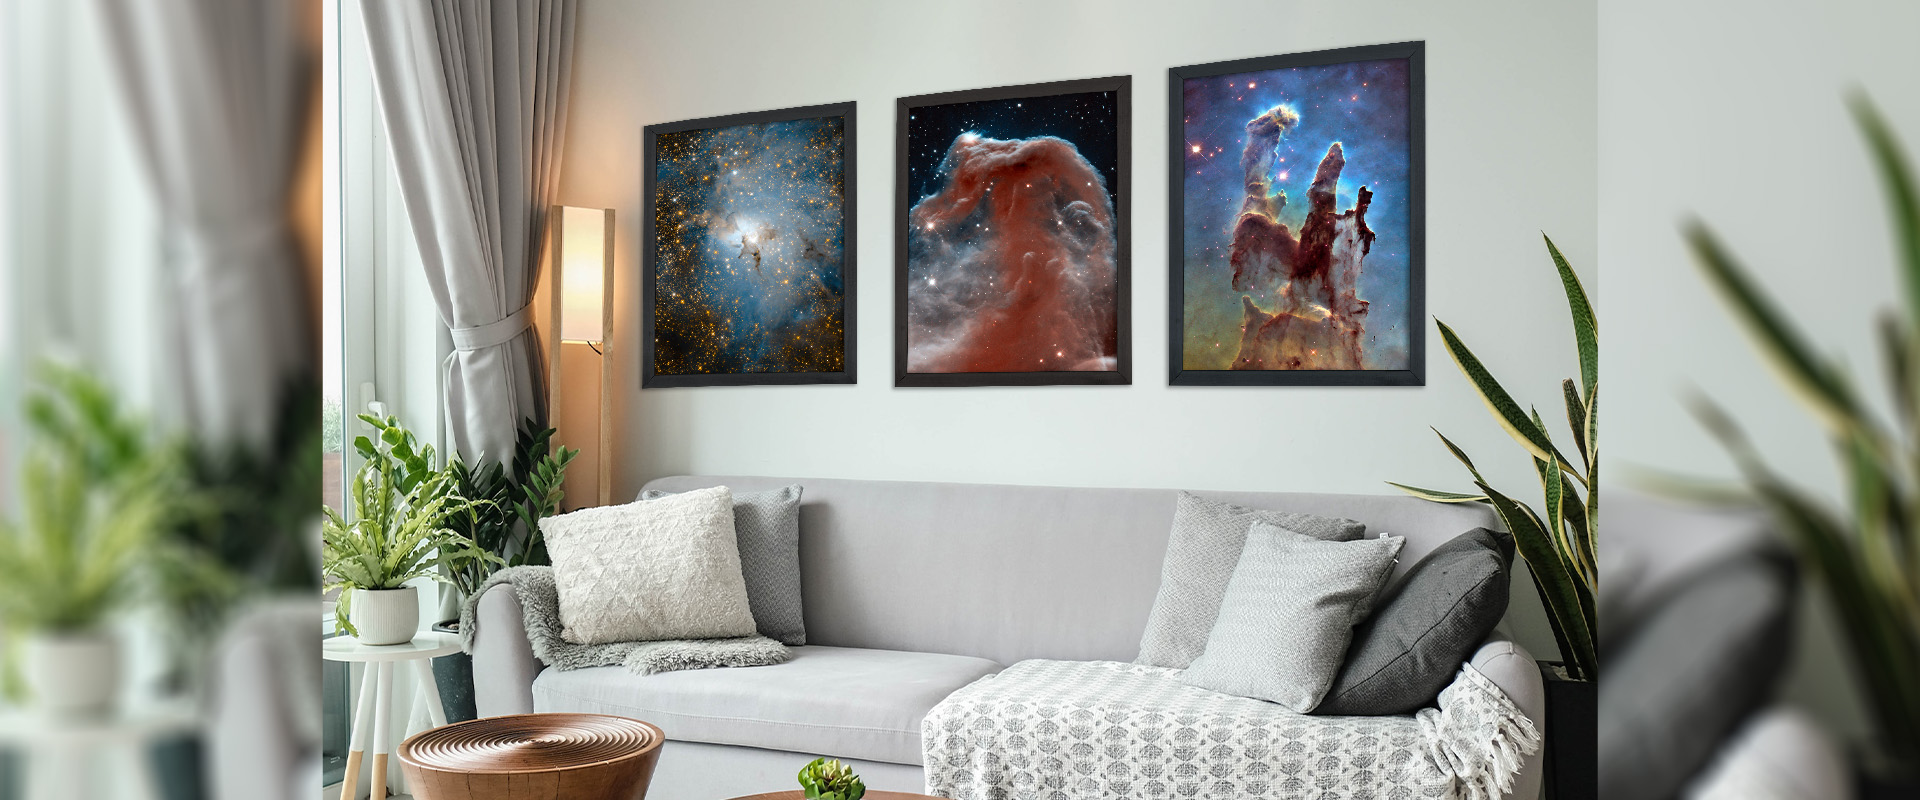 Far space - nebulae, galaxies